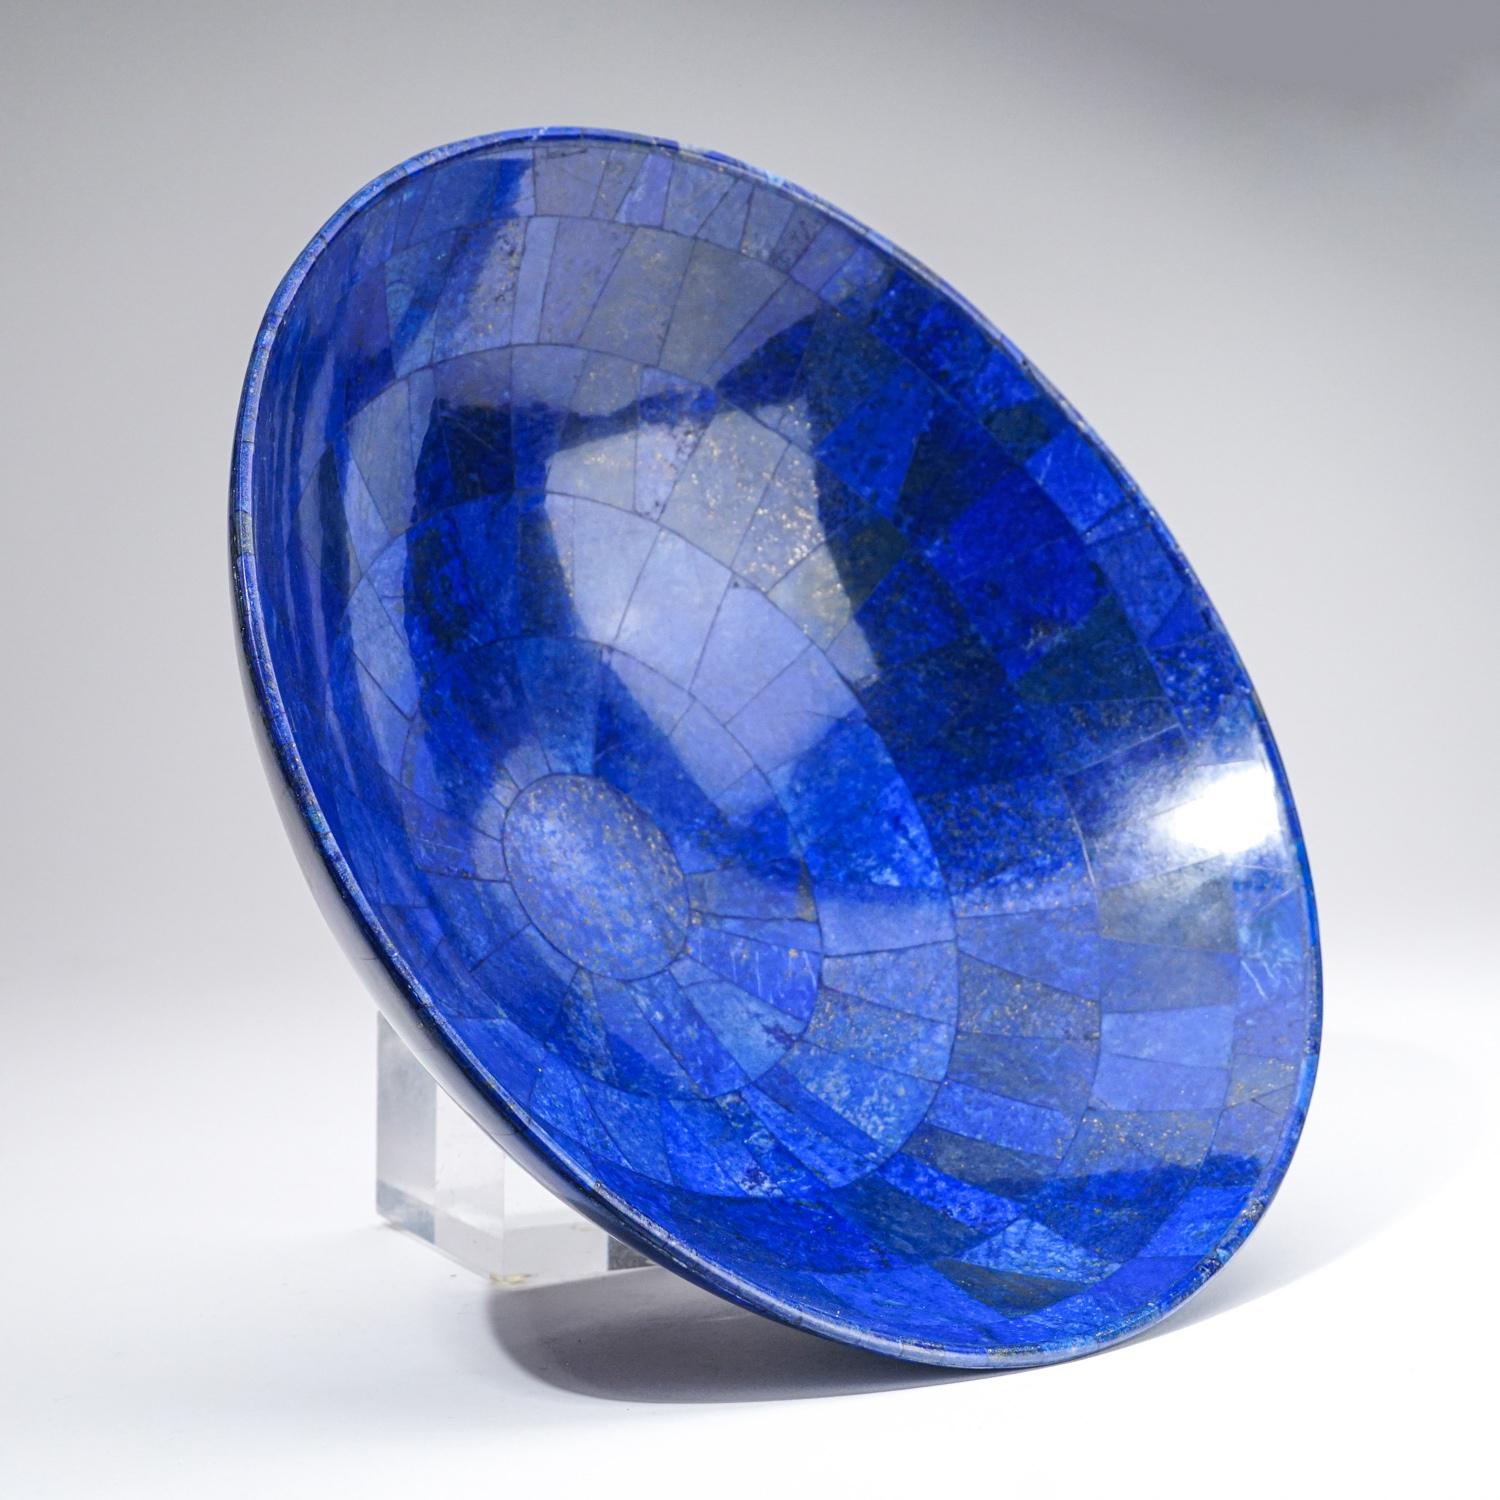 Afghan Genuine Polished Lapis Lazuli Bowl (3.6 lbs) For Sale